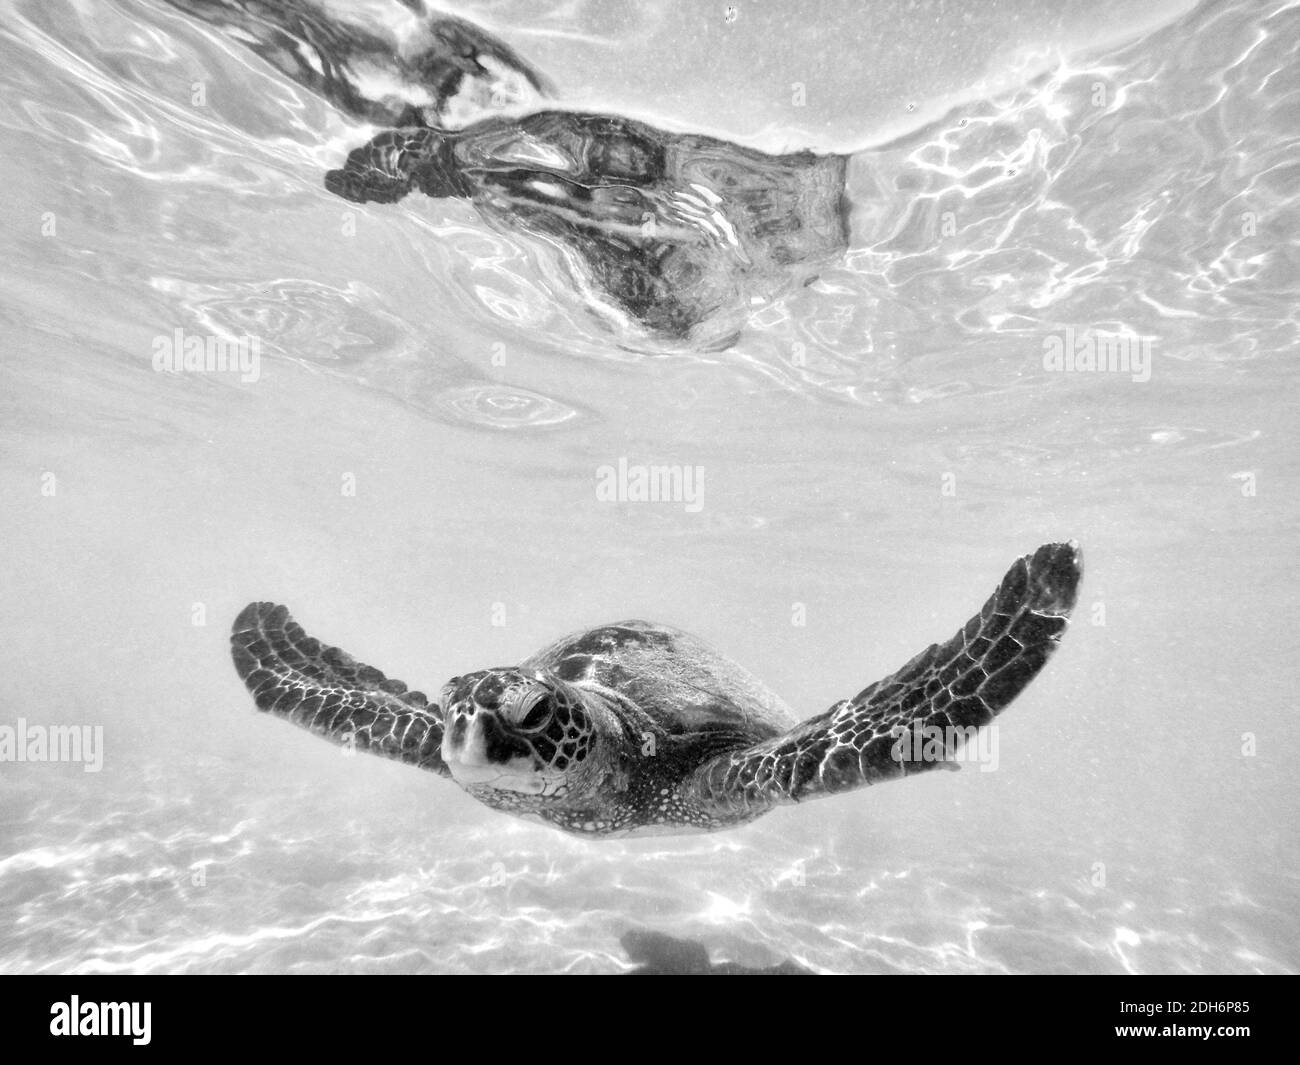 Nuoto Hawaiian tartaruga di mare verde (Chelonia mydas) Grande Isola, Hawaii Foto Stock